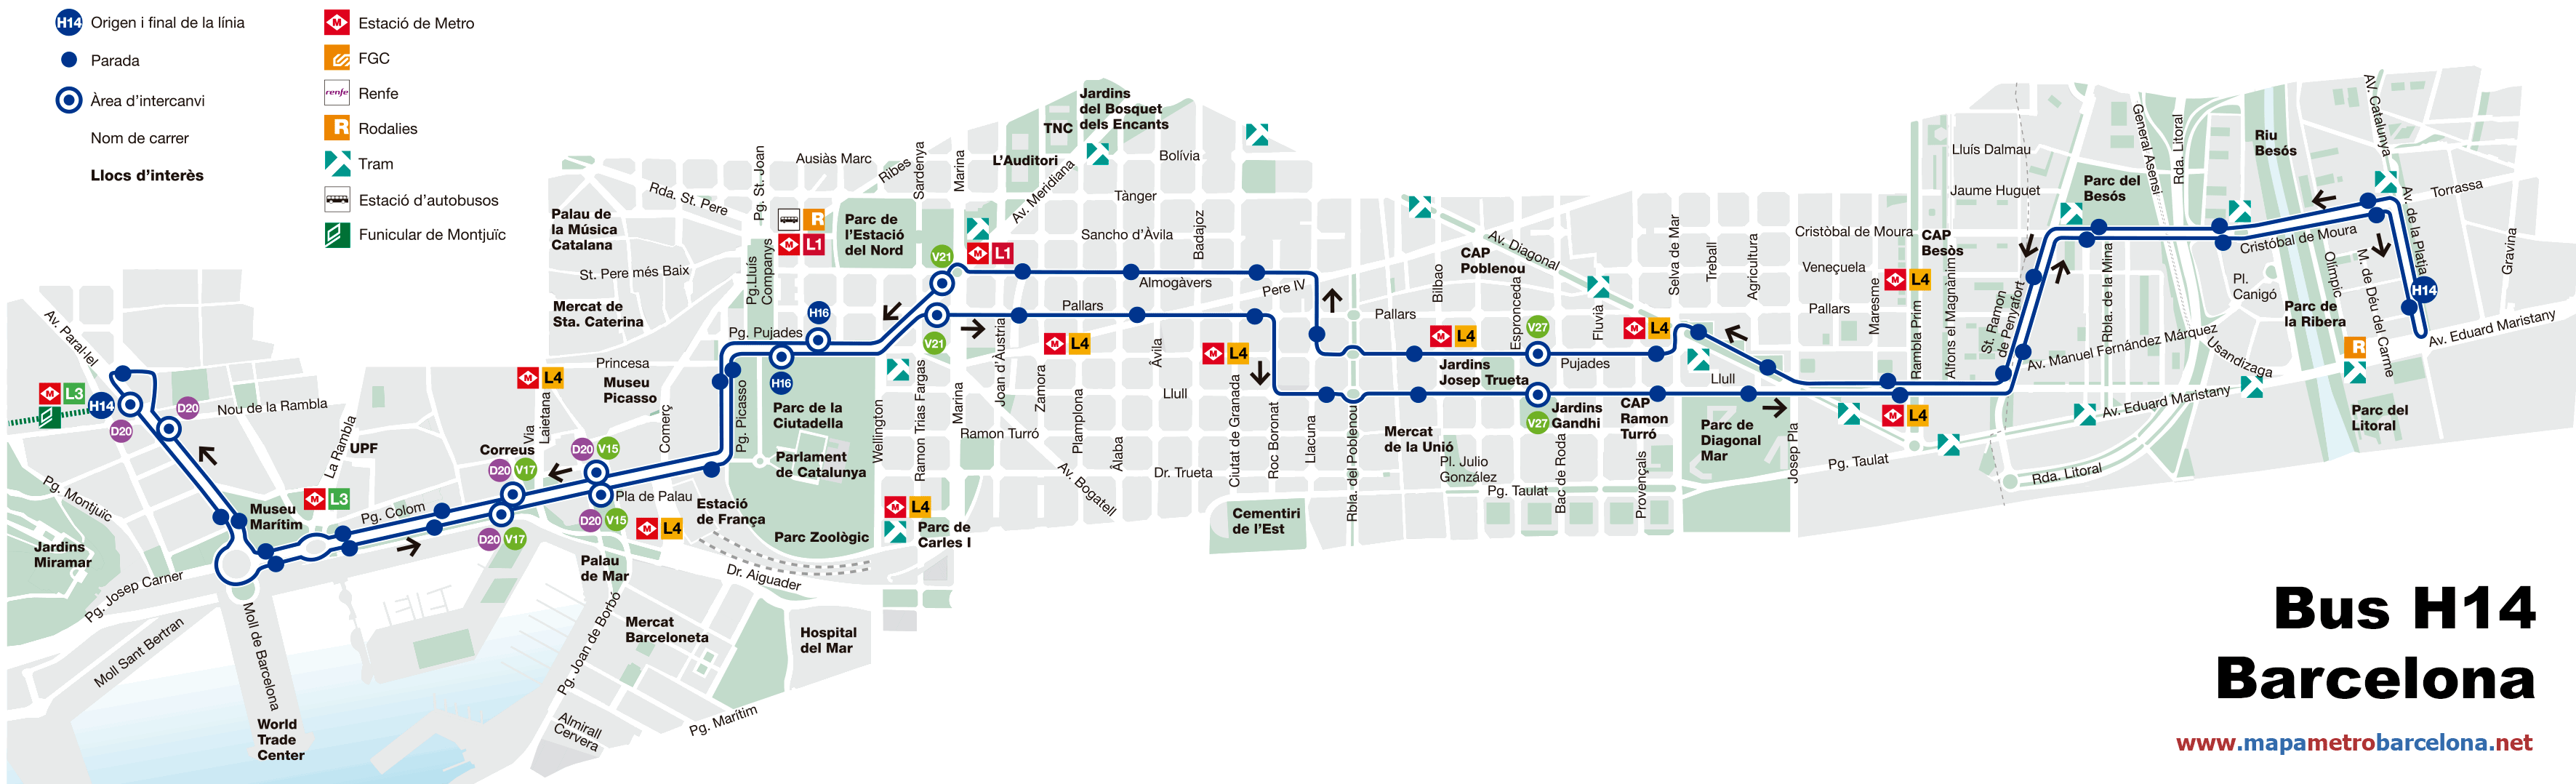 Mapa bus Barcelona línea H14